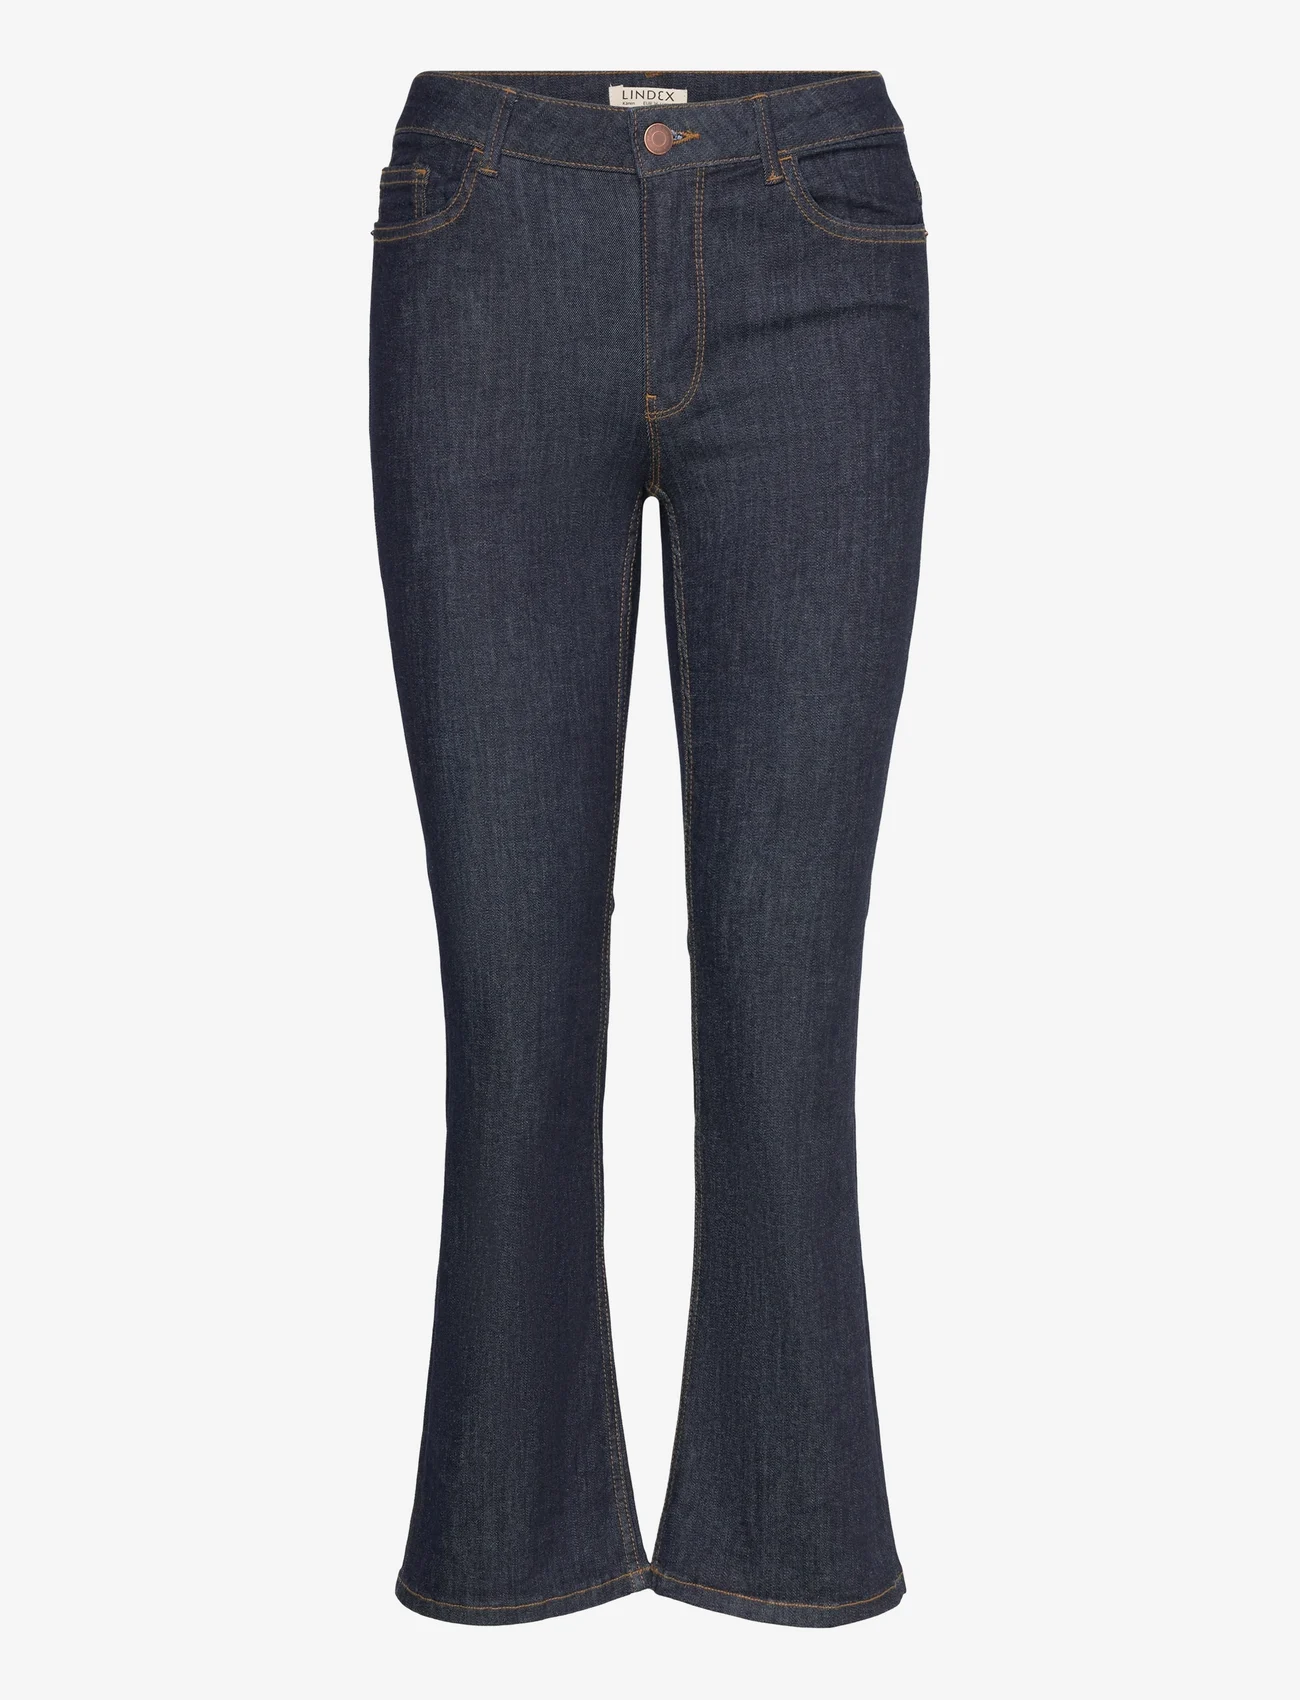 Lindex - Trouser Karen cropped rinse bl - utsvängda jeans - dark denim - 0